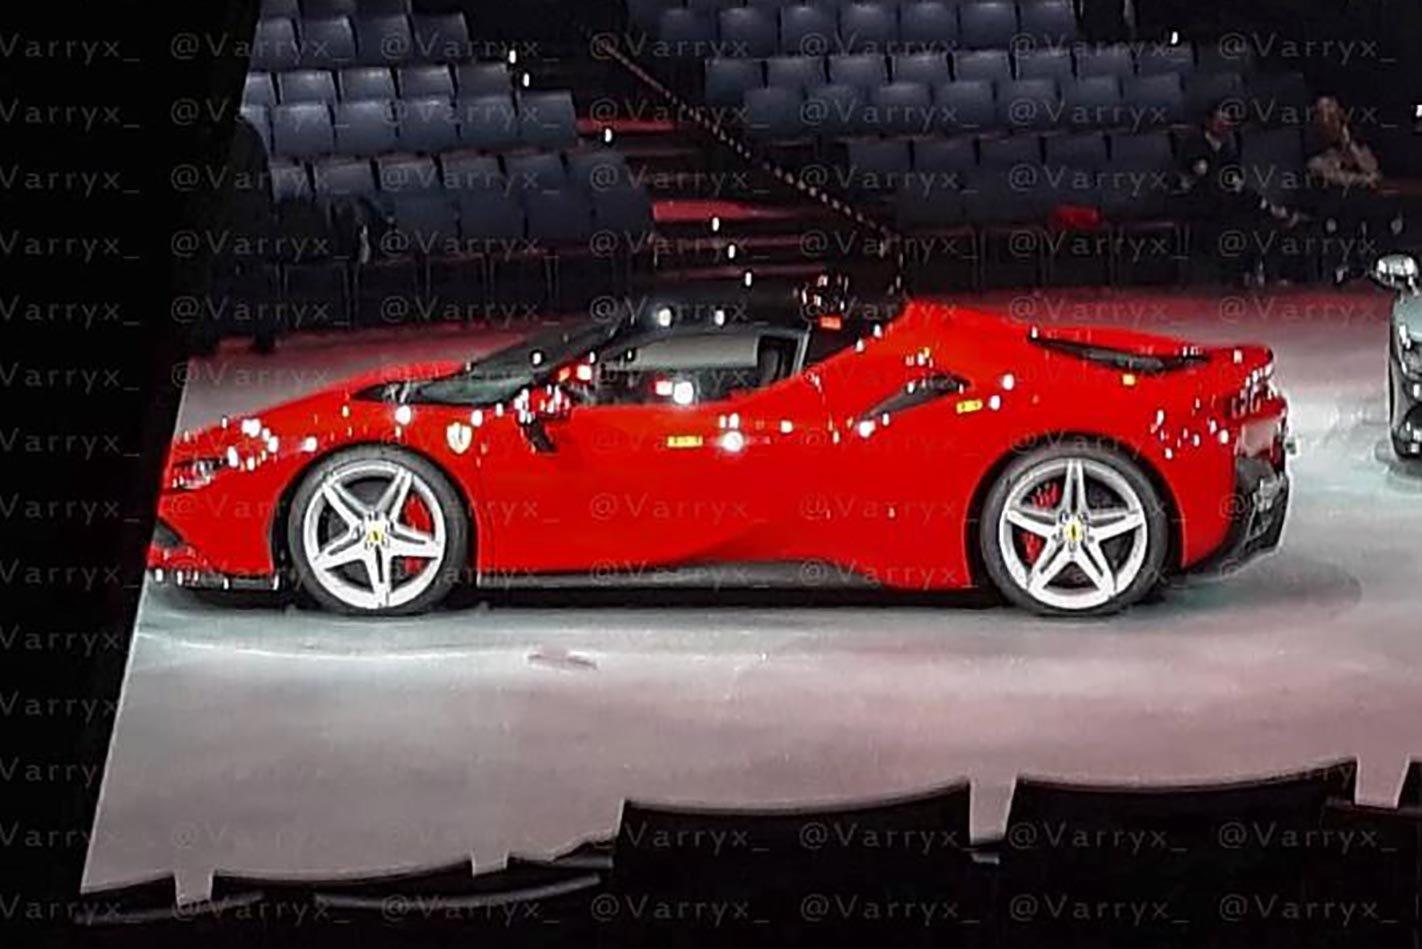 Ferrari SF90 Stradale image leaks